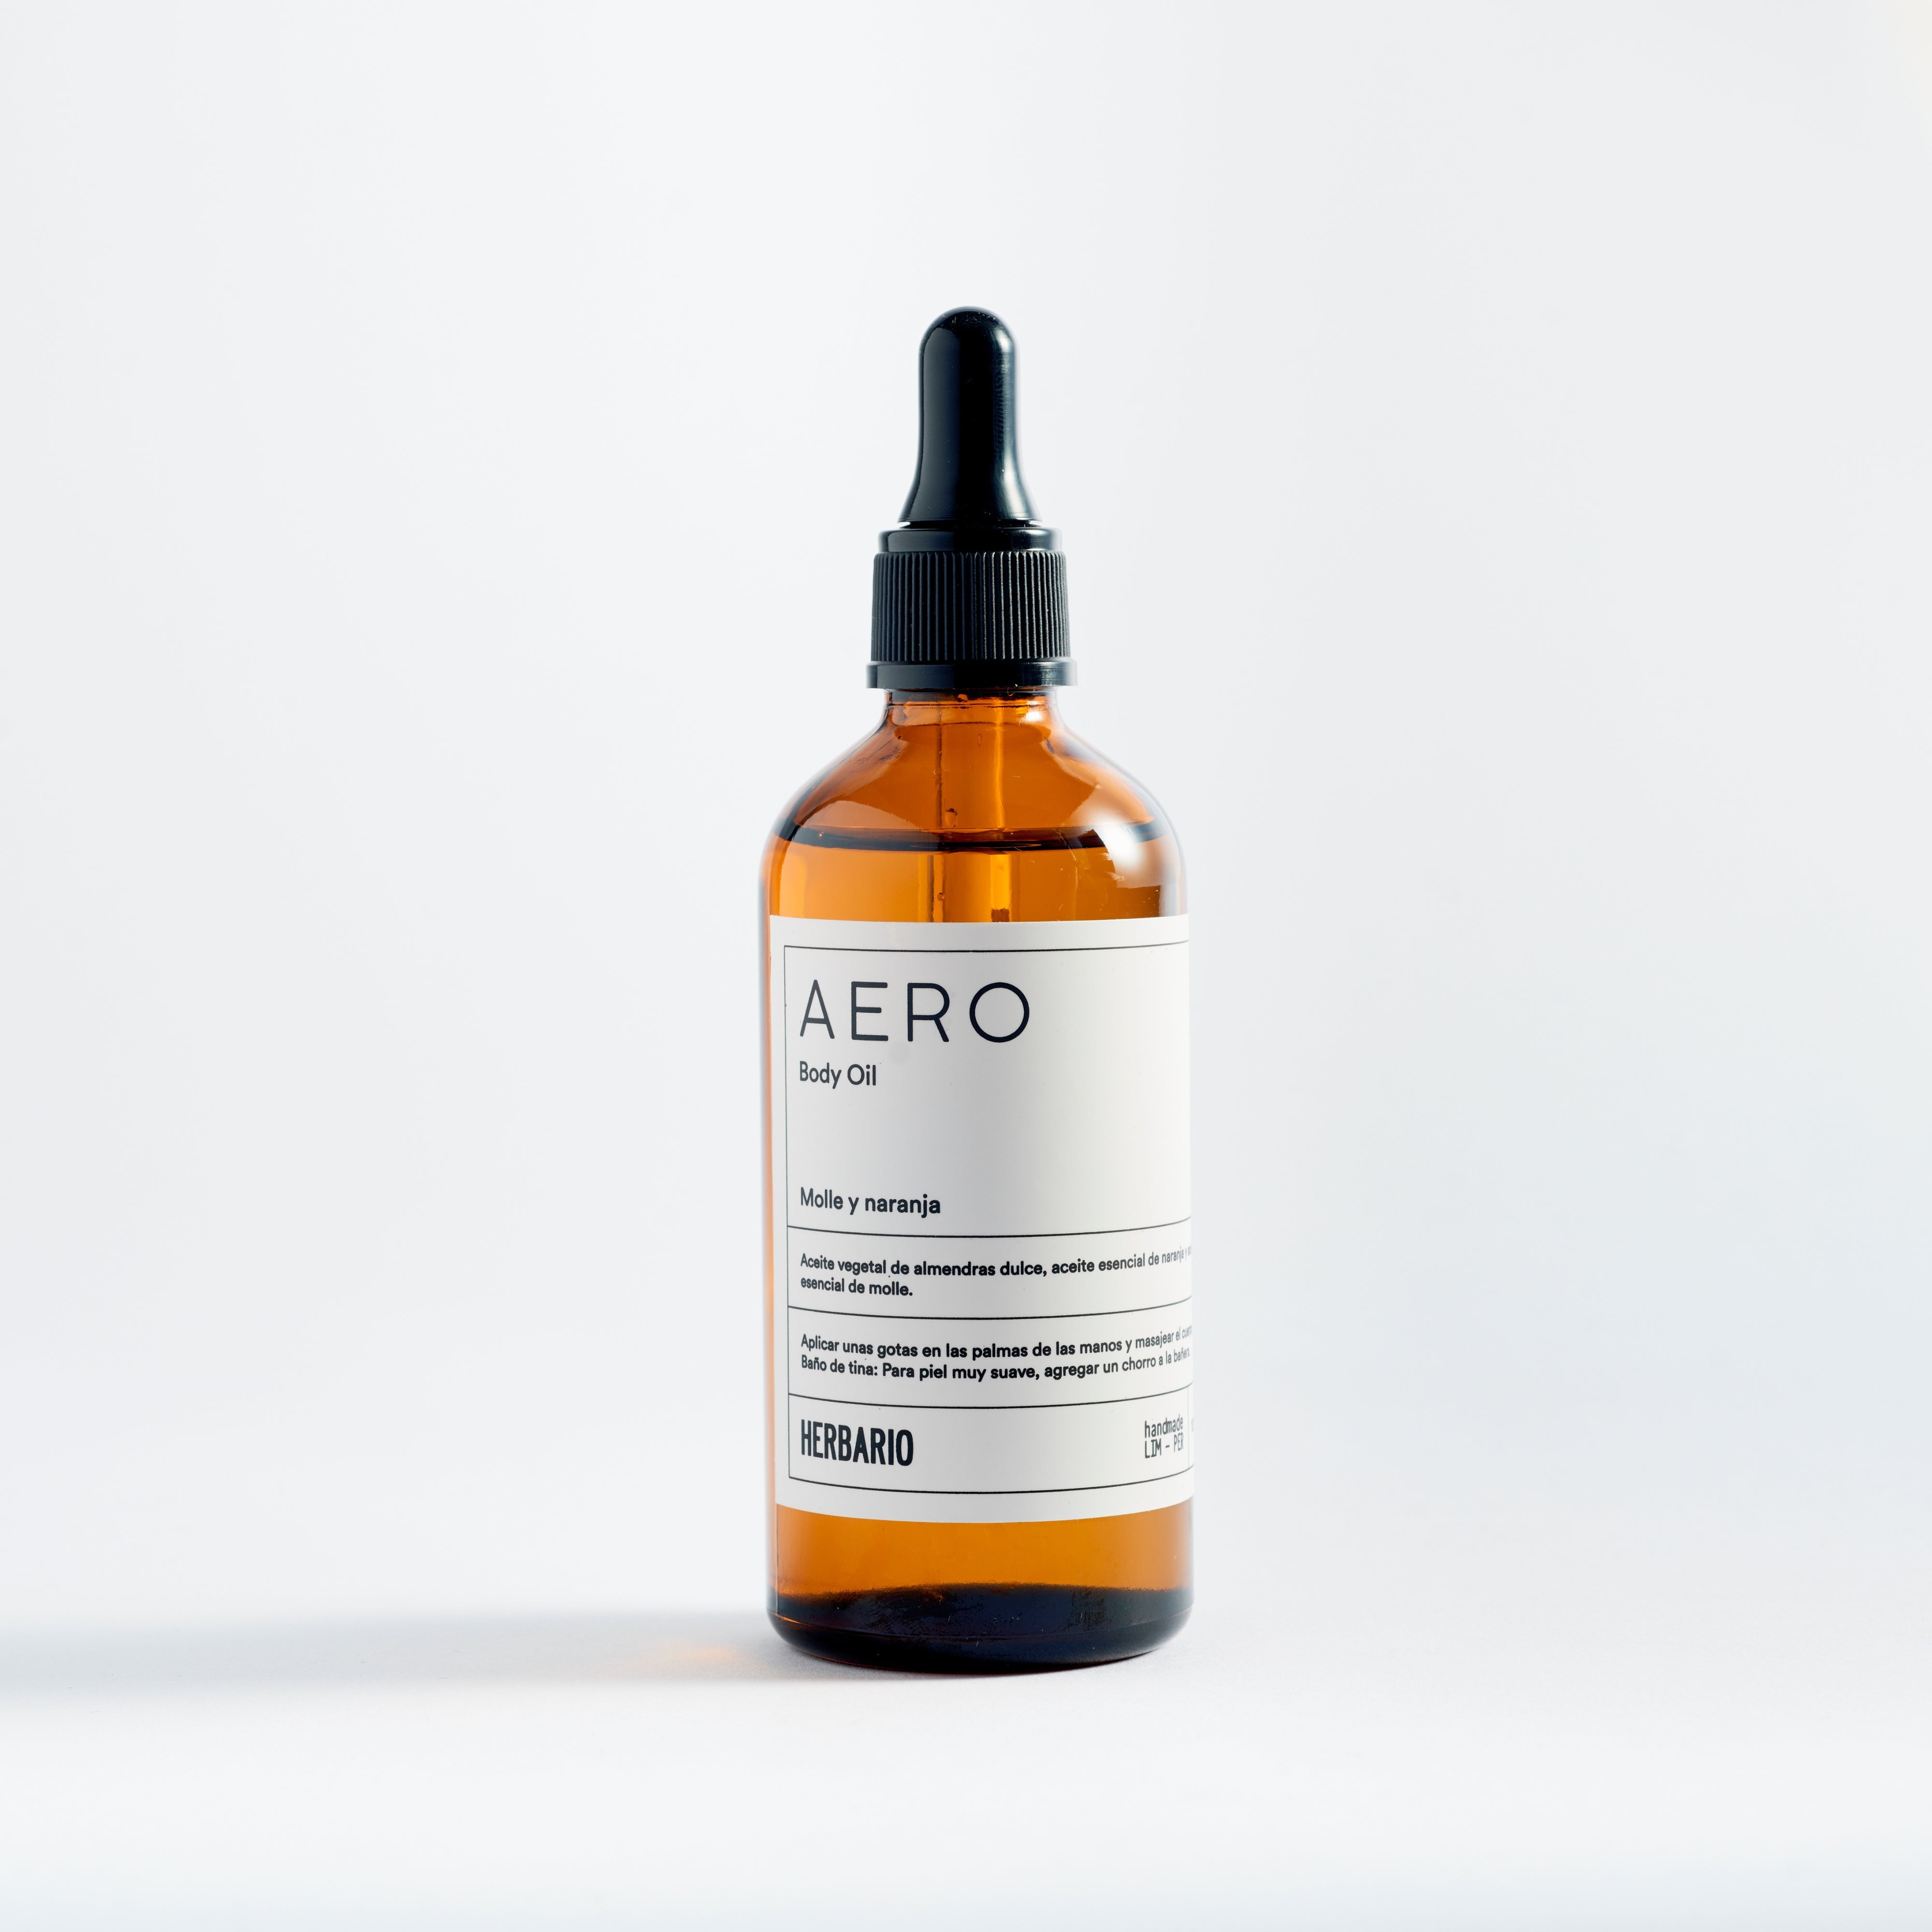 Body Oil Aero - molle y naranja